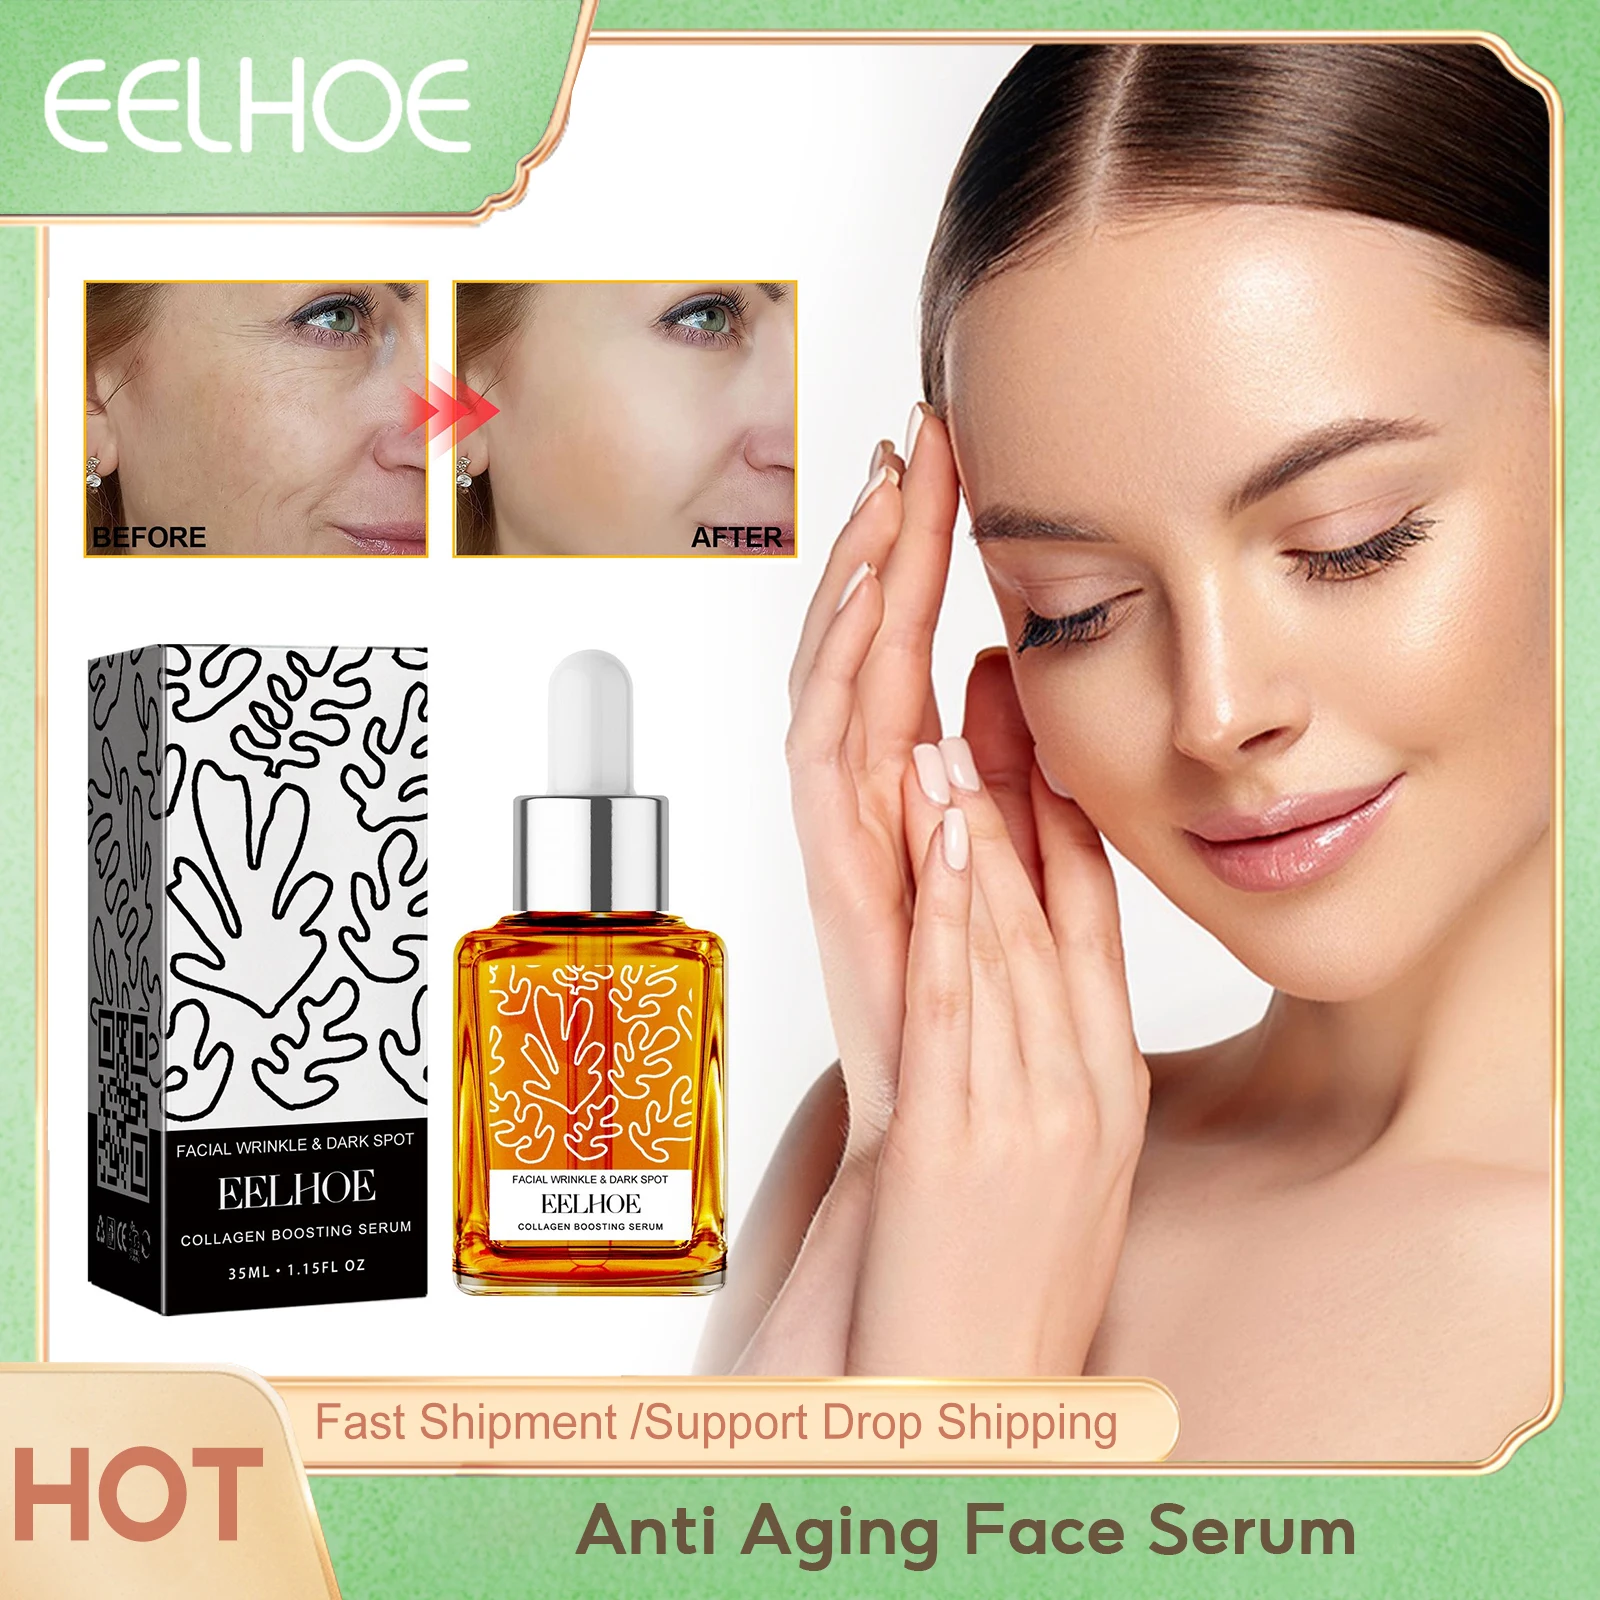 Anti Aging Face Serum Hyaluronic Acid Lifting Firming Reduce Wrinkle Fine Lines Improve Sagging Moisturizing Smoothing Skin Care